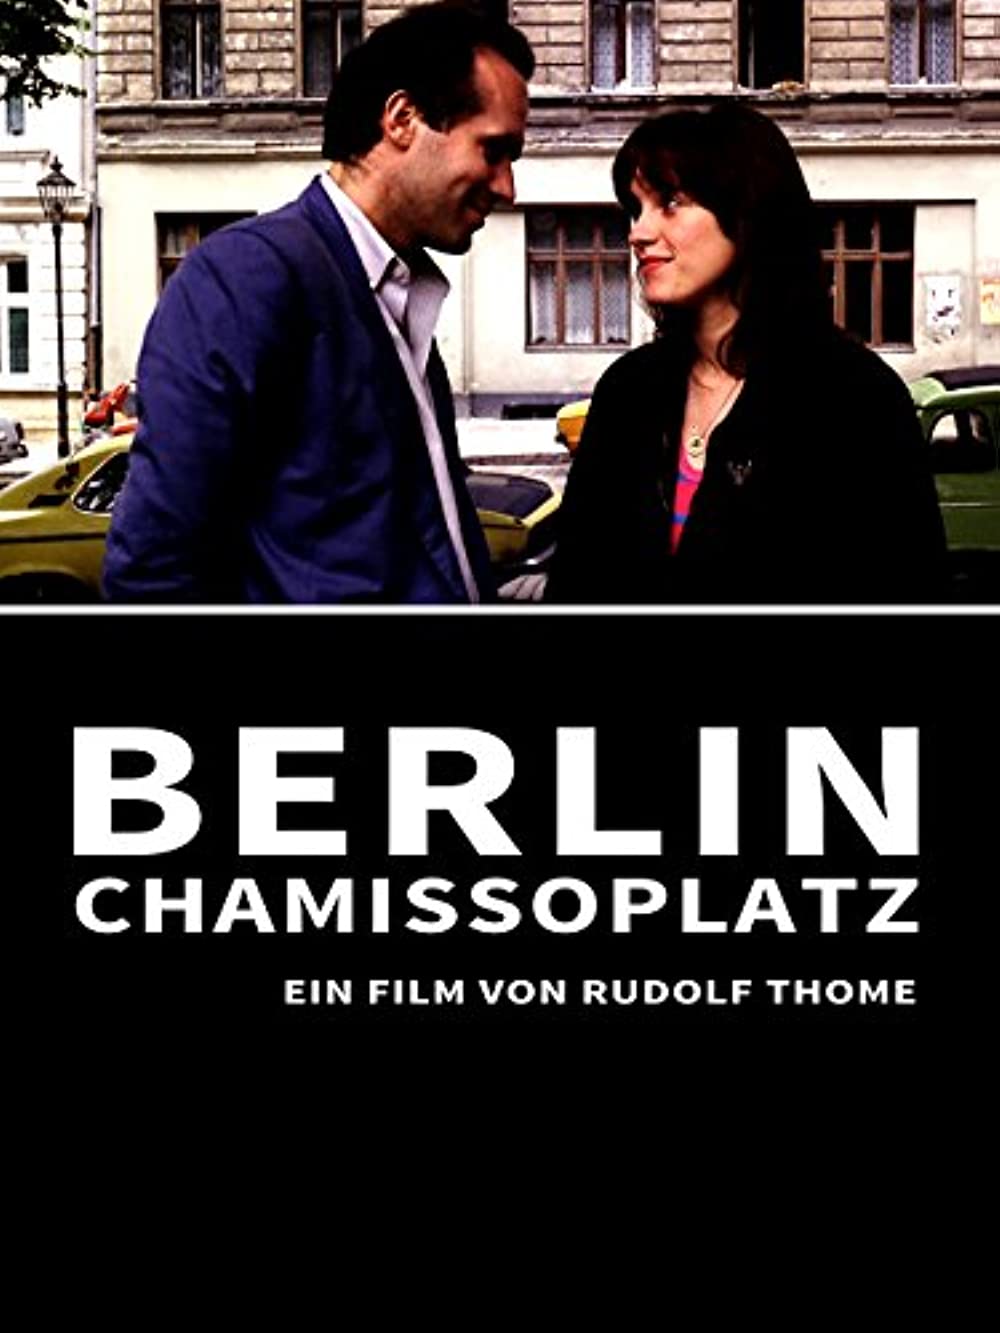 Filmbeschreibung zu Berlin Chamissoplatz